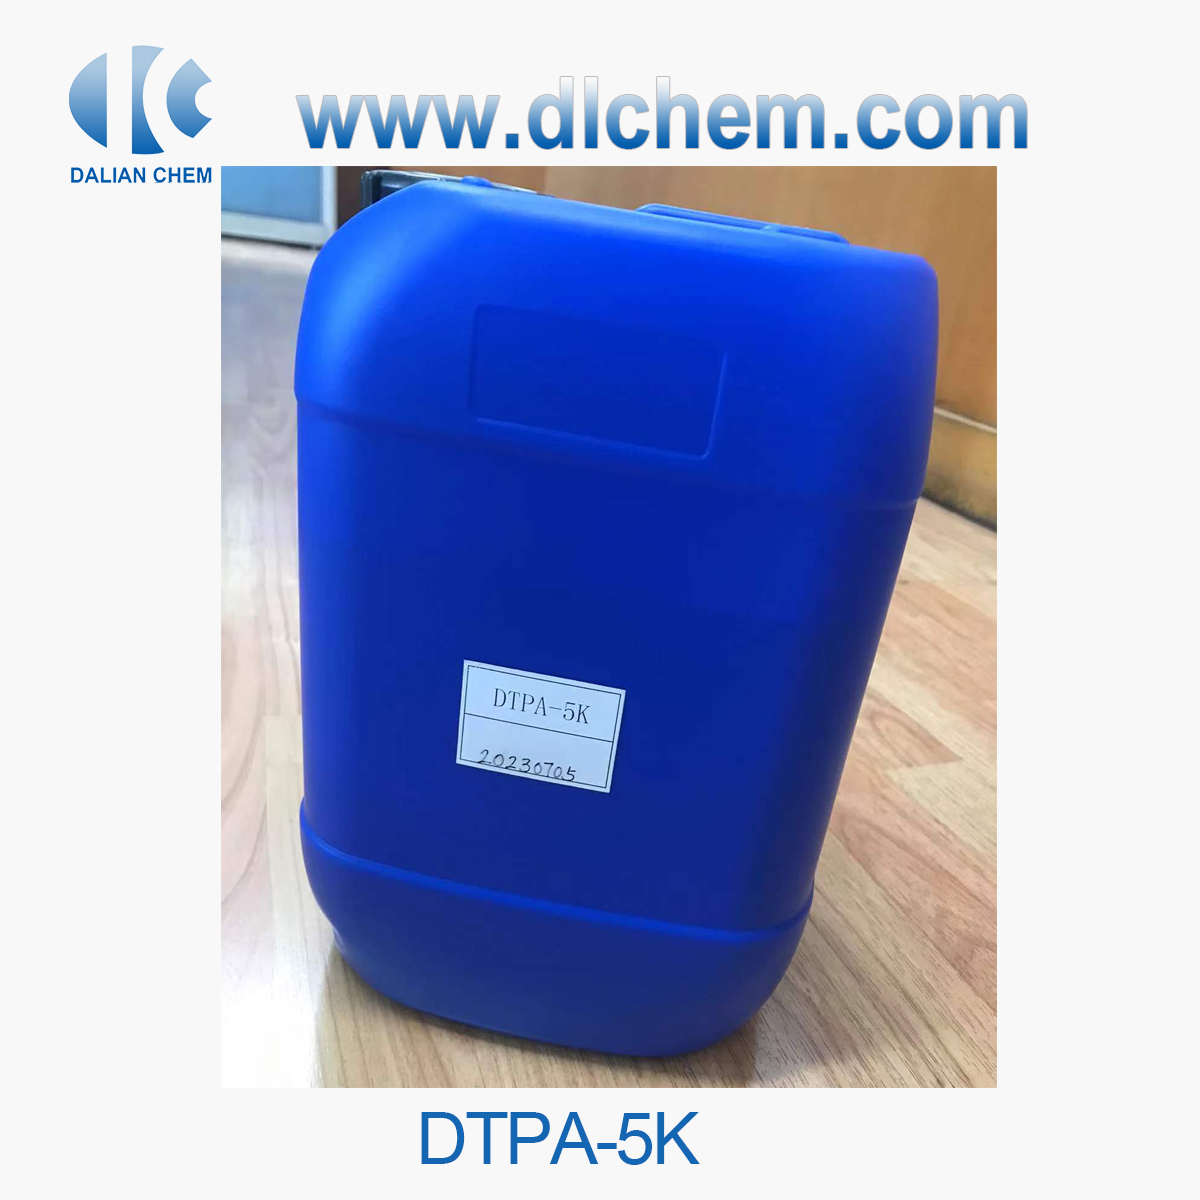 Penta POTASSIUM diethylene triaminepentaacetic acid pentaPOTASSIUM salt(DTPA-5K )